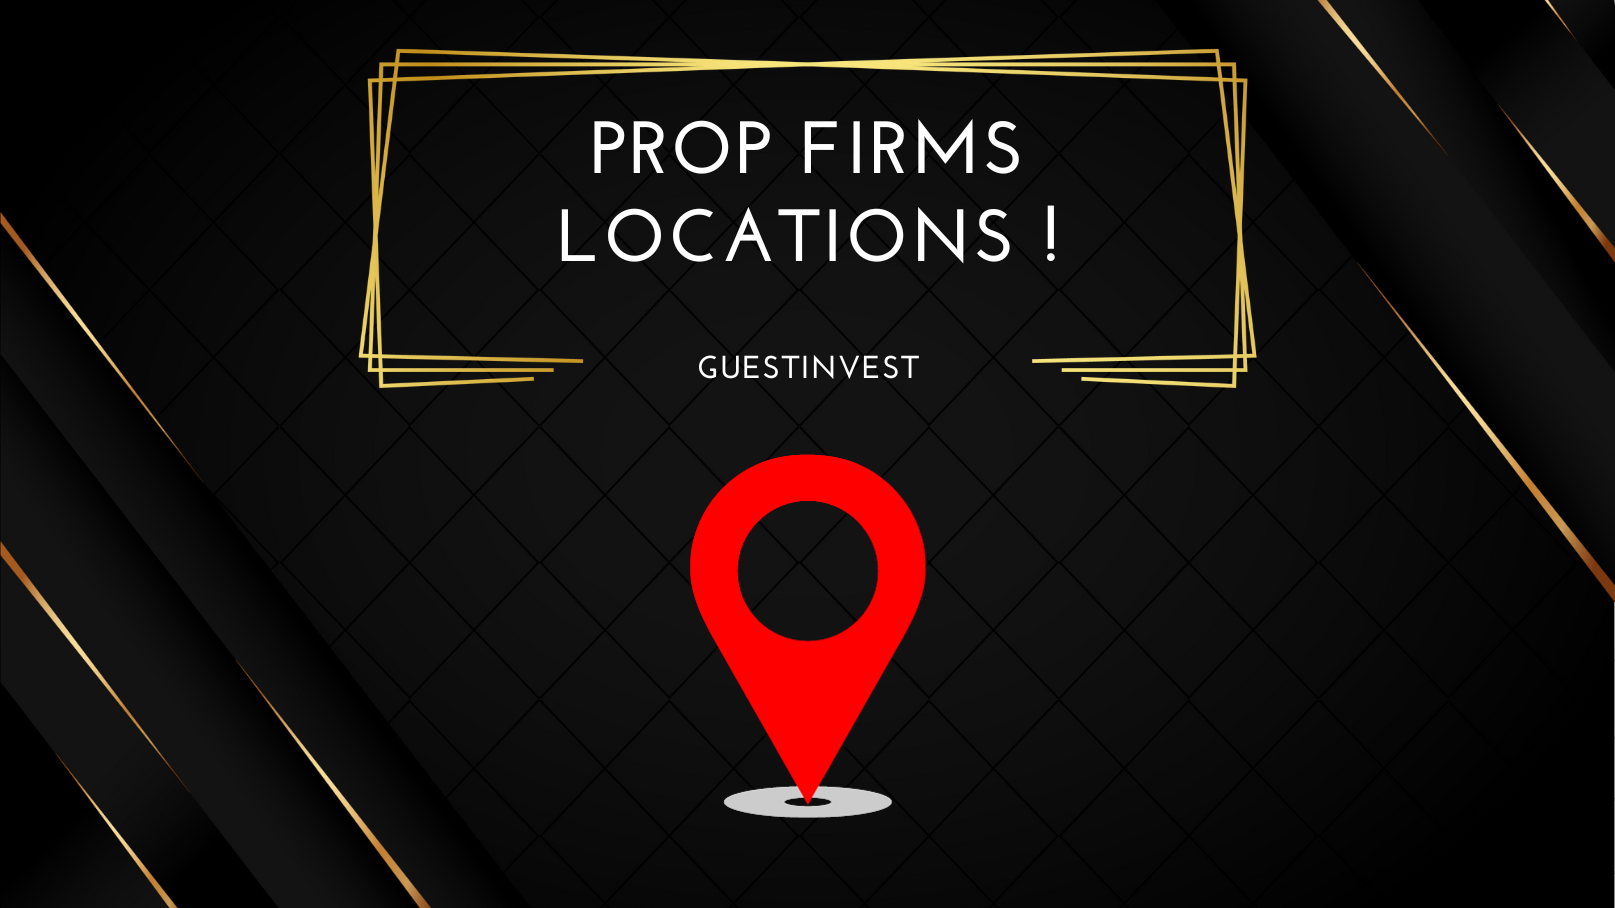 Prop firm worldwide locations